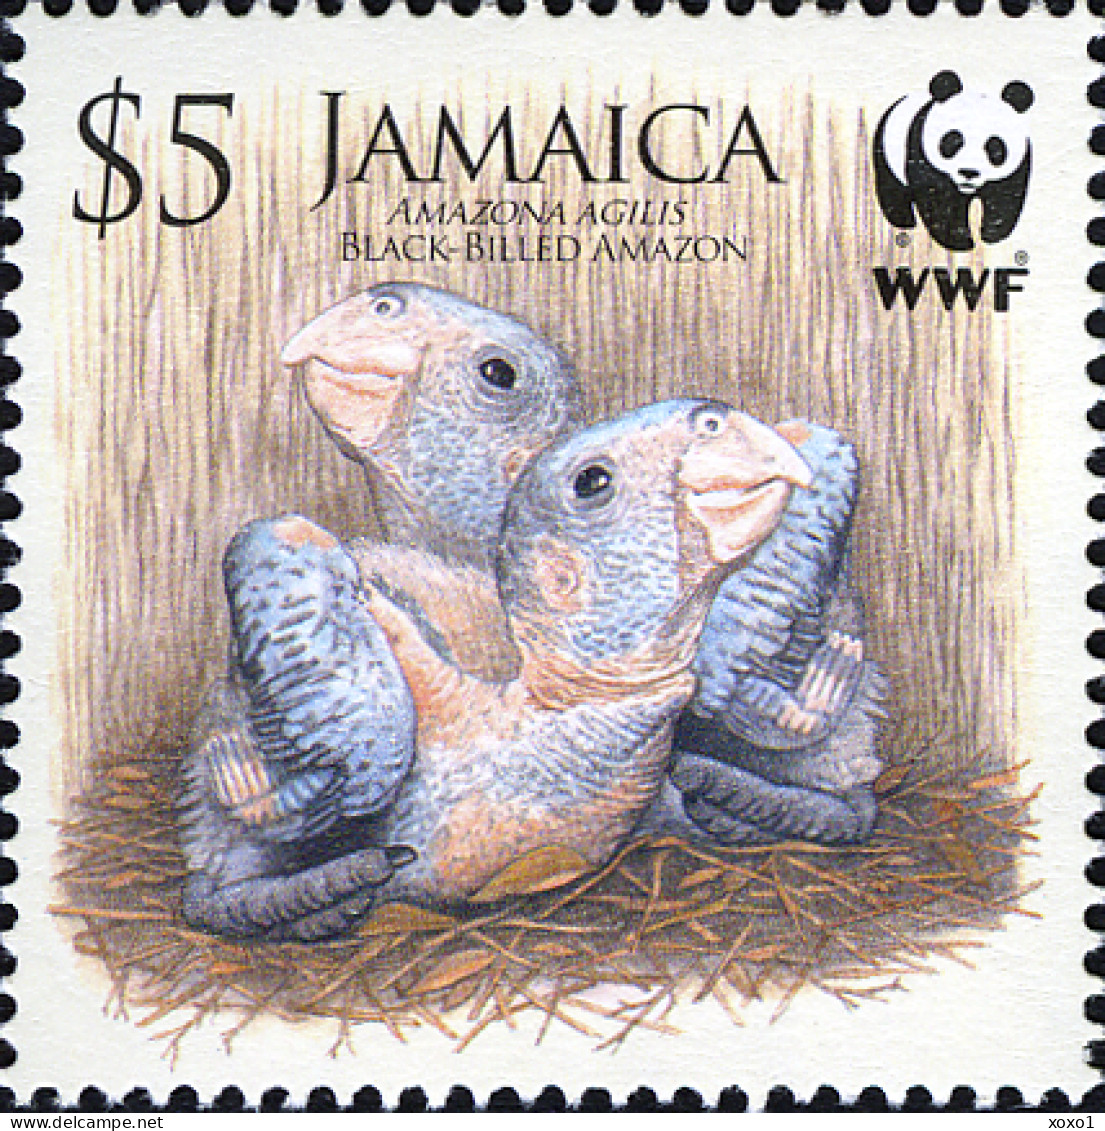 Jamaica 2006 MiNr. 1122 - 1125 Jamaika WWF Birds, Parrots, Black-billed Amazon M/sh MNH** 12.80 € - Perroquets & Tropicaux